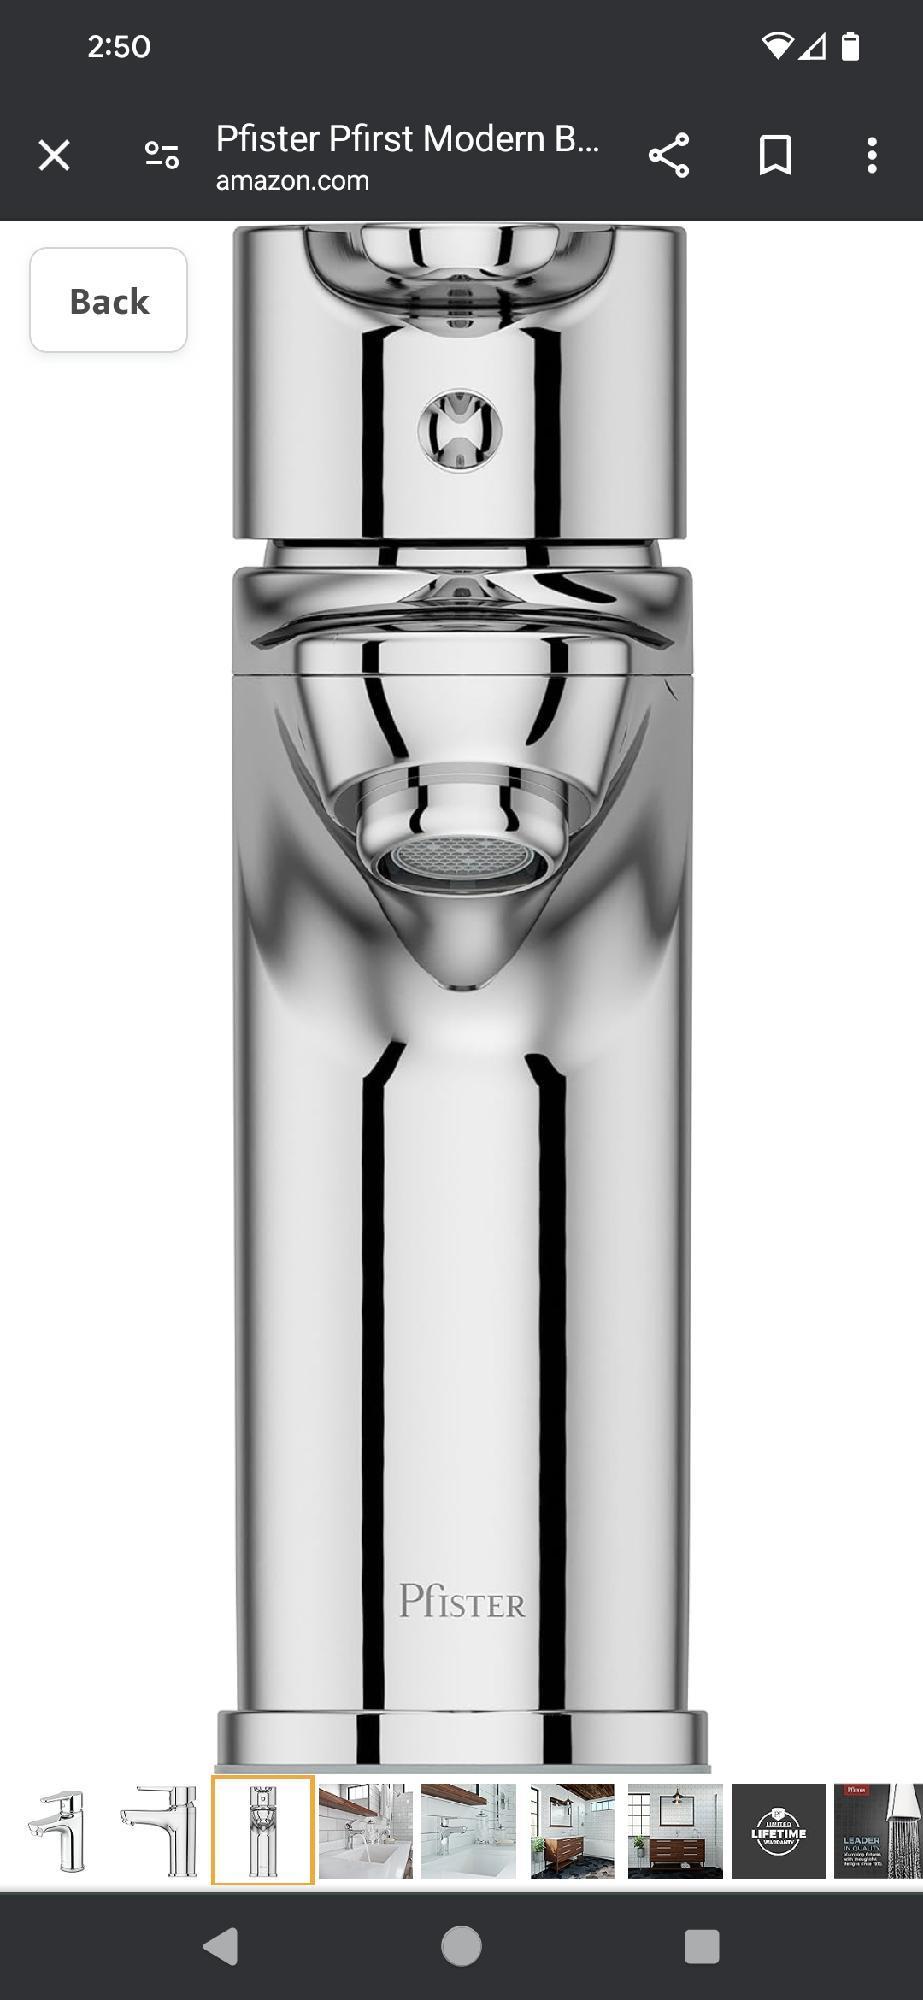 Pfister Pfirst Modern Single Hole Single-Handle Bathroom Faucet in Polished Chrome, Model